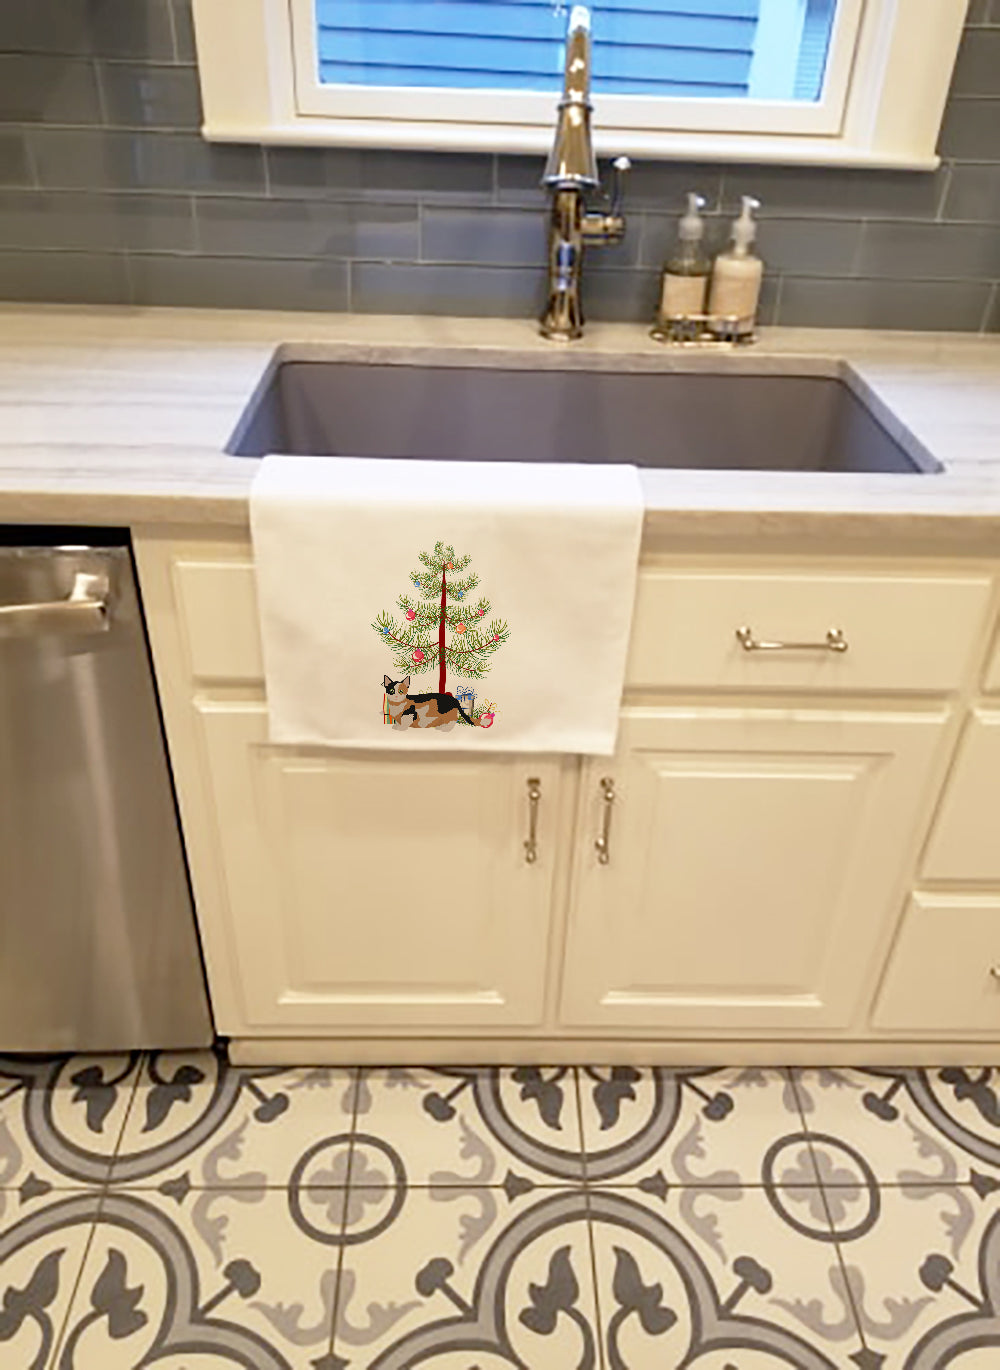 Buy this Munchkin Cat Merry Christmas White Kitchen Towel Set of 2